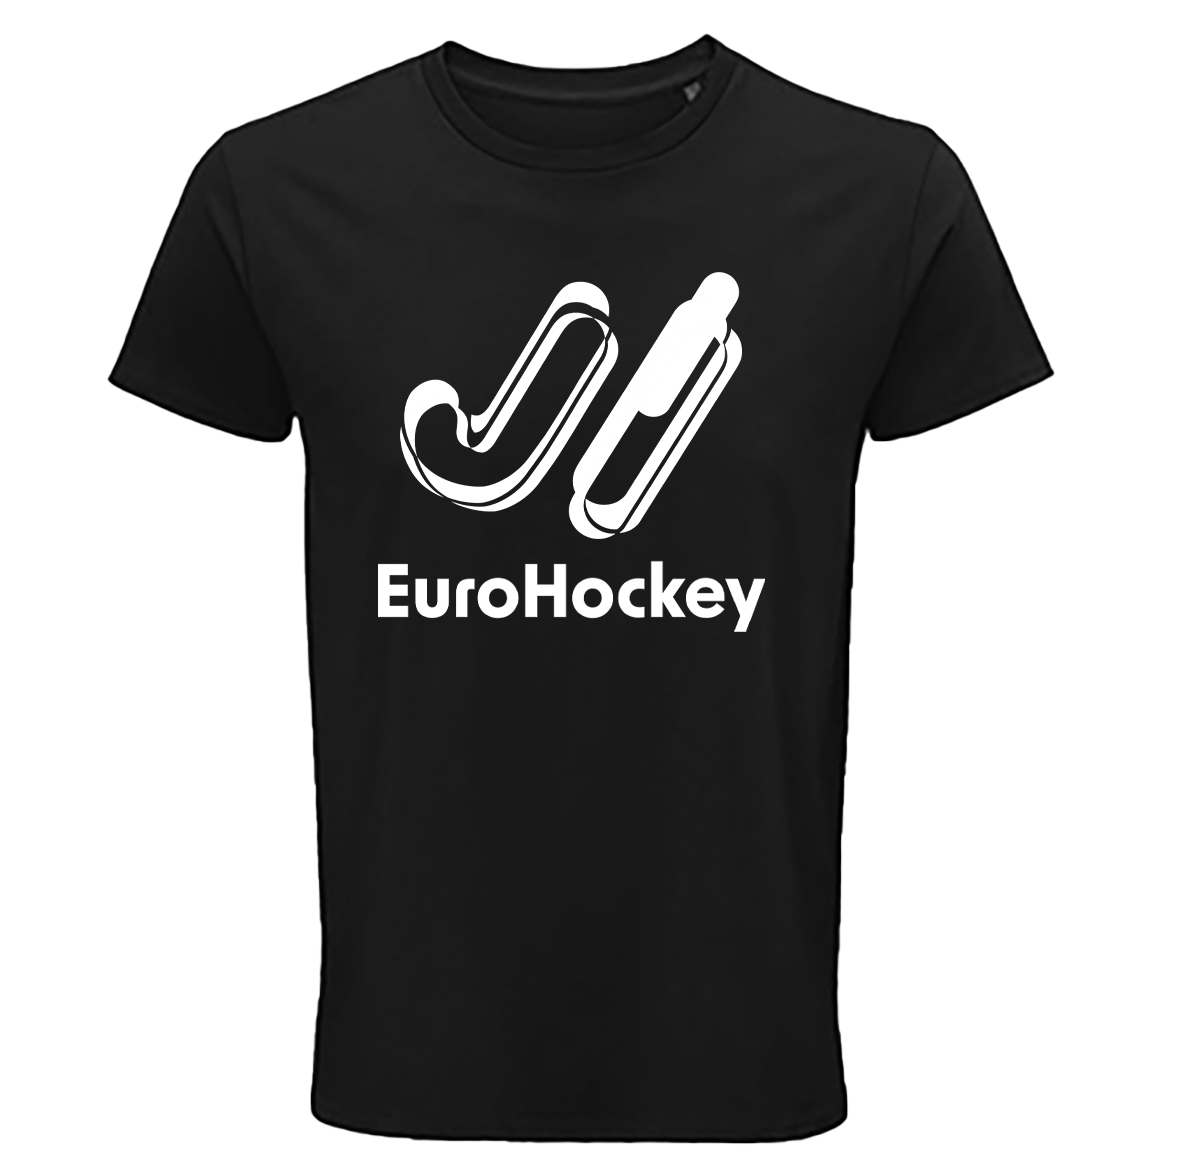 Kinder T-Shirt EuroHockey Schwarz